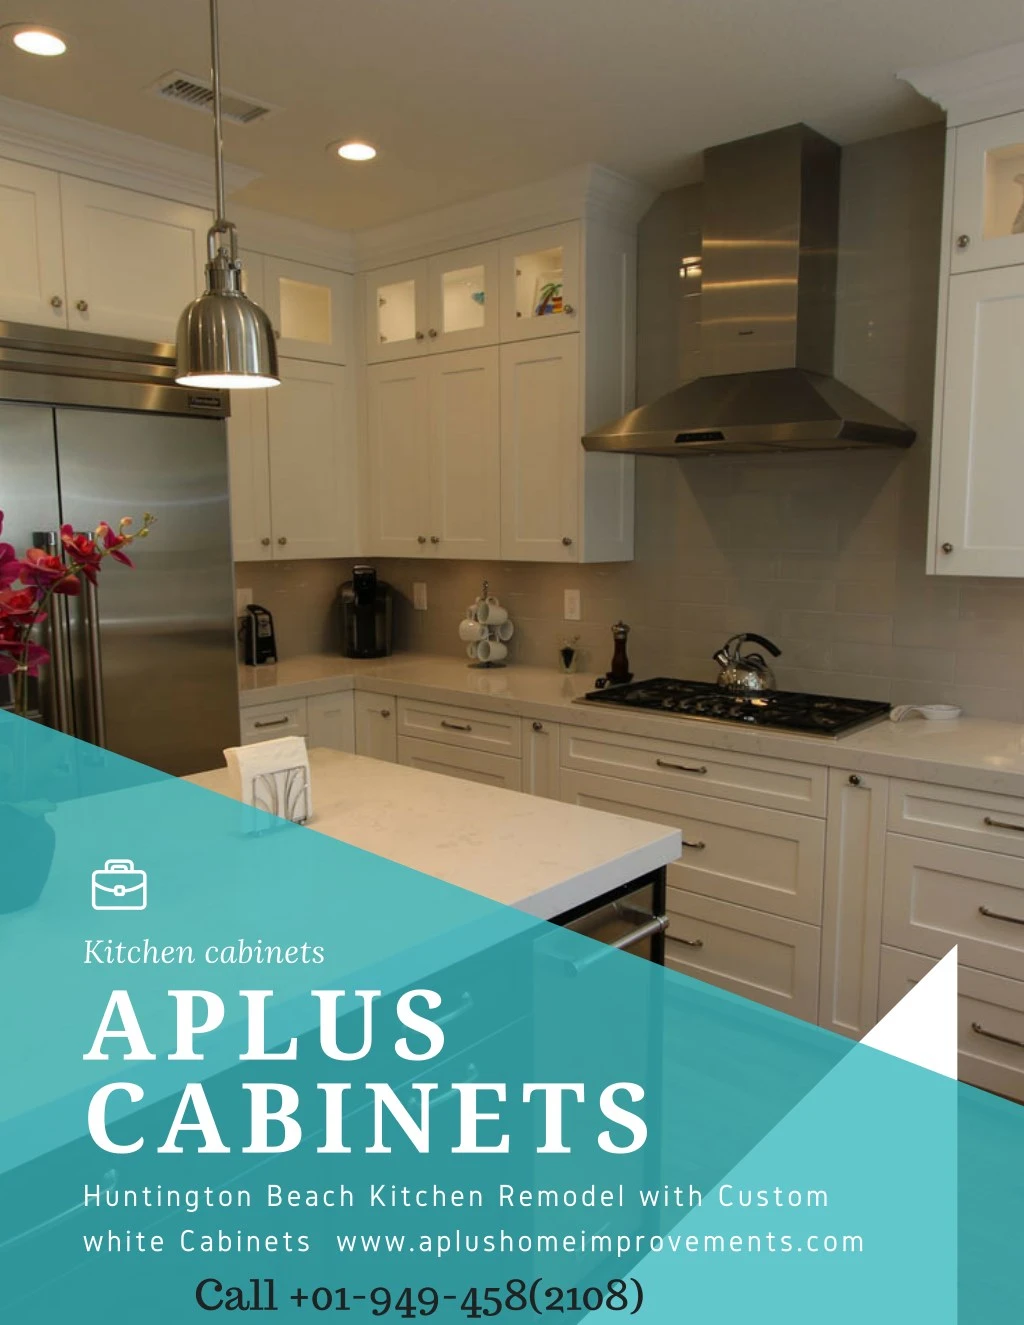 kitchen cabinets aplus cabinets